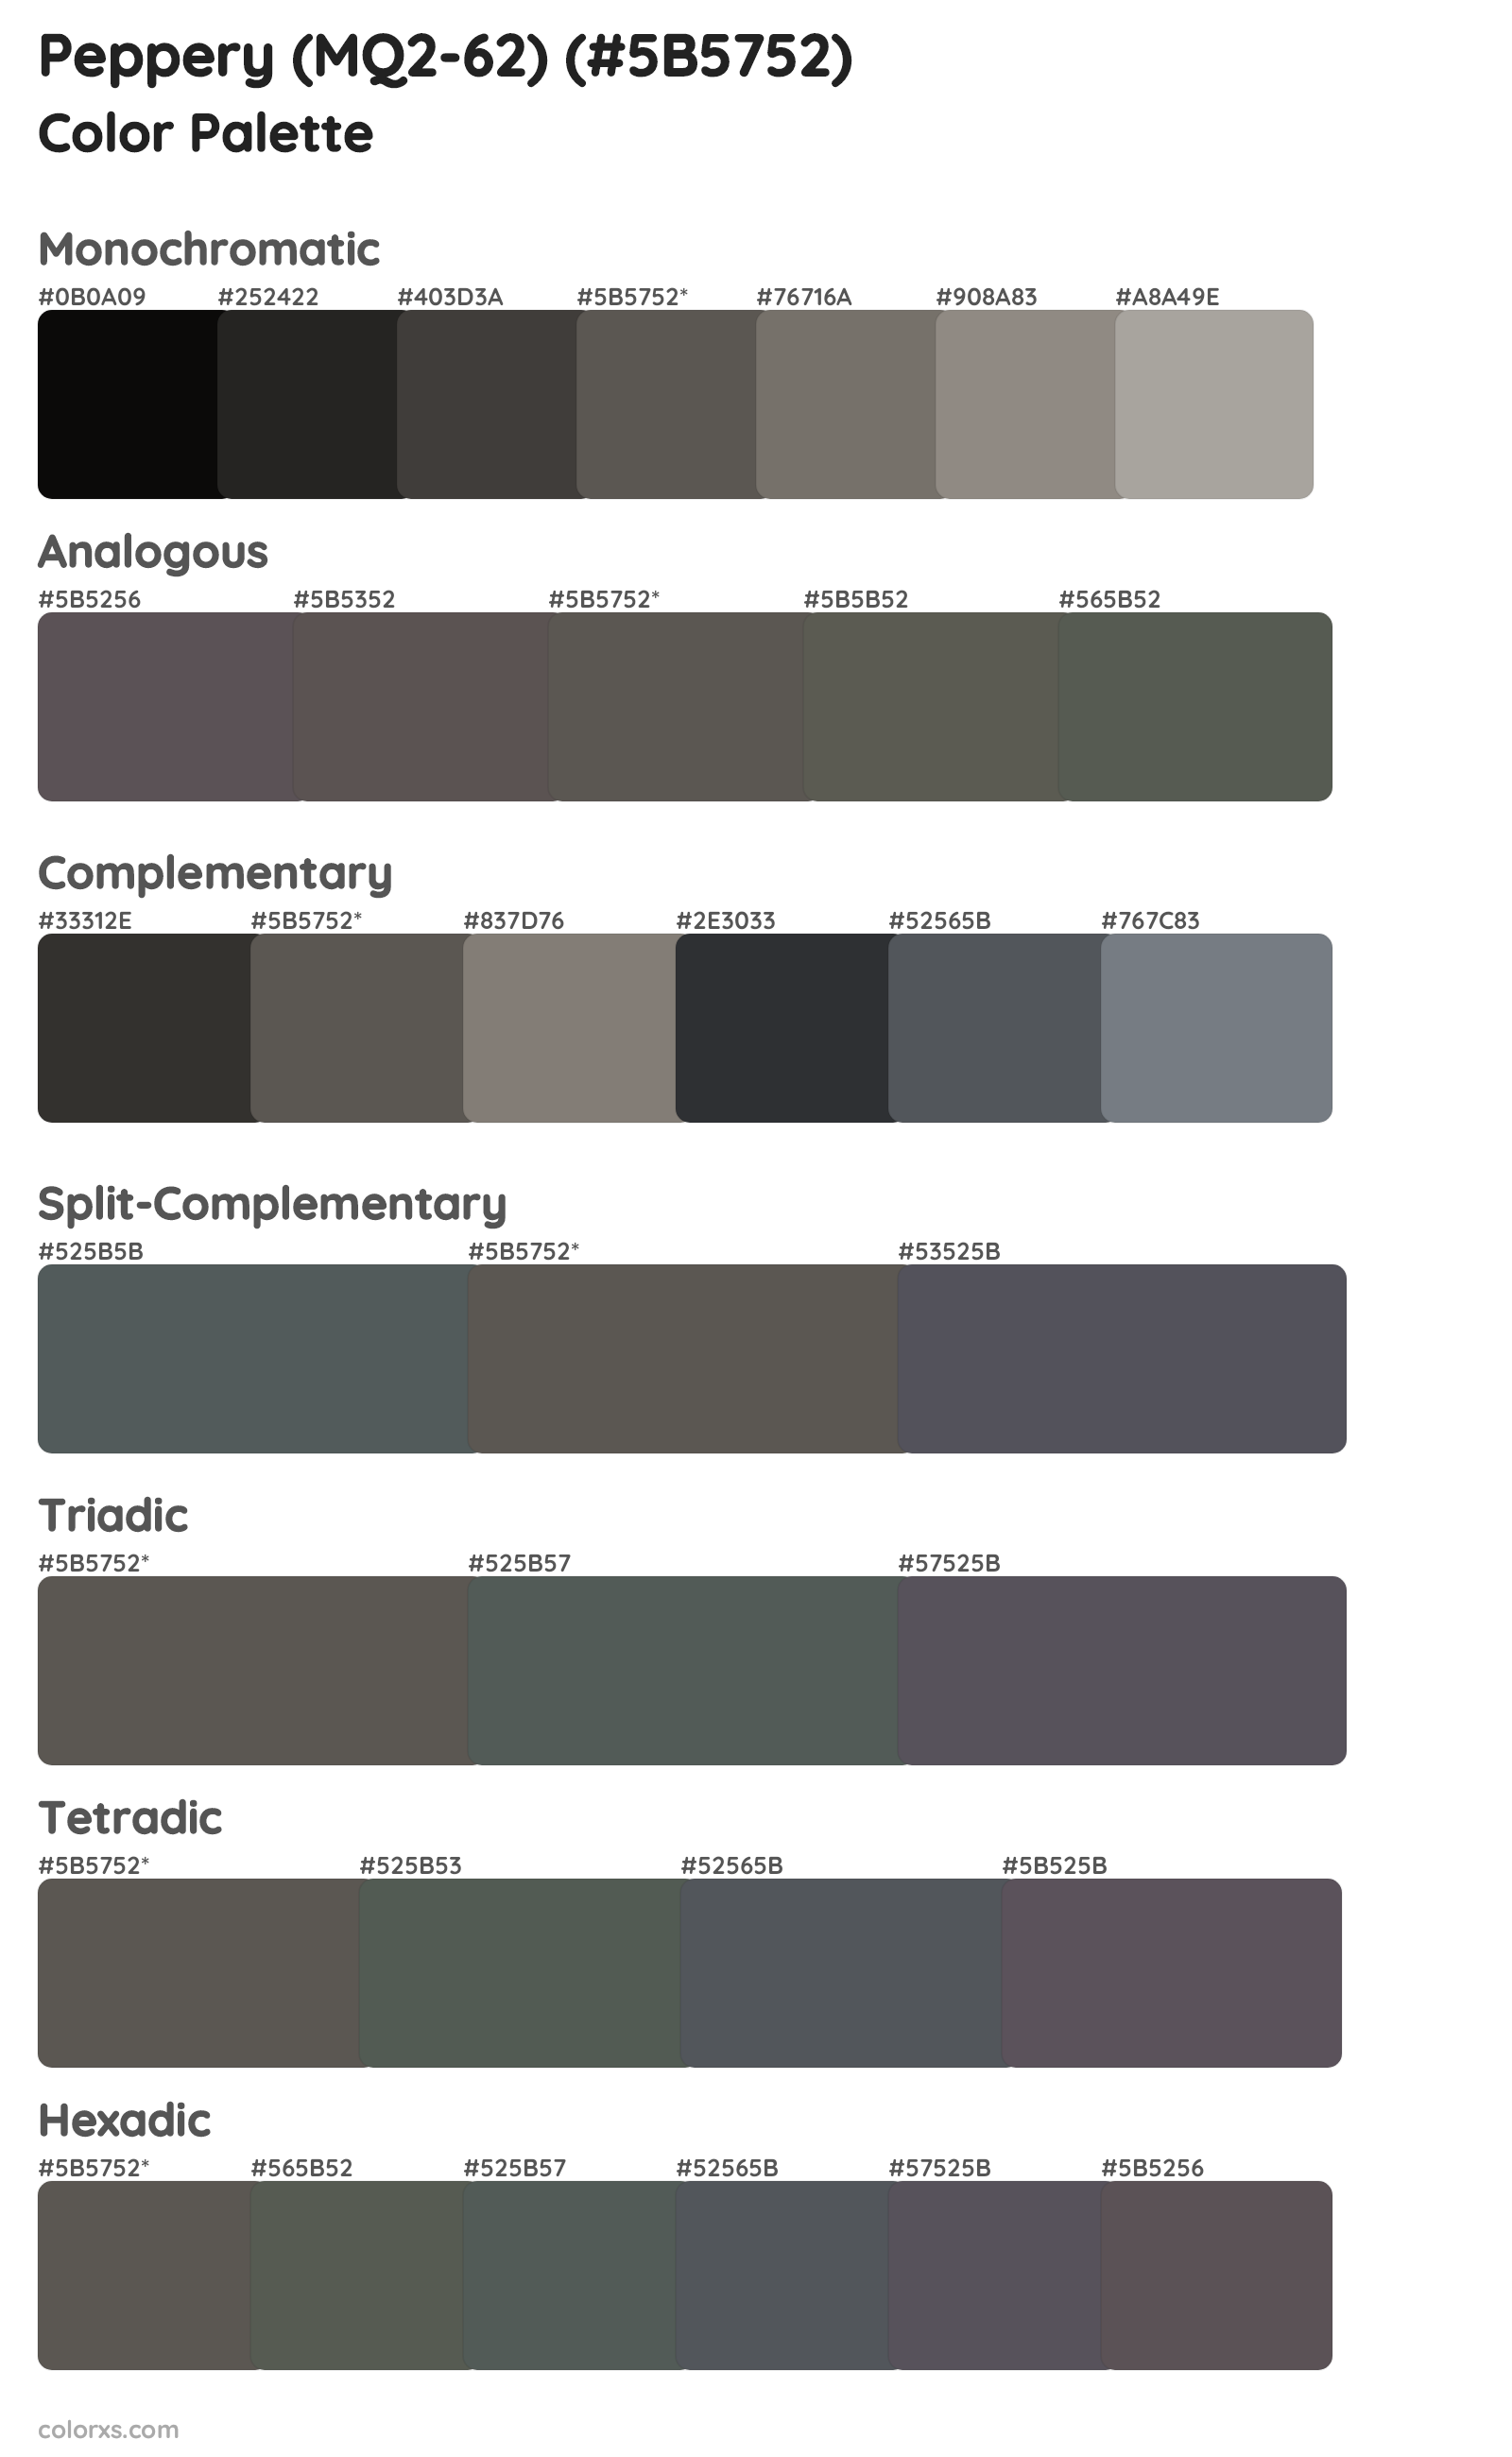 Peppery (MQ2-62) Color Scheme Palettes